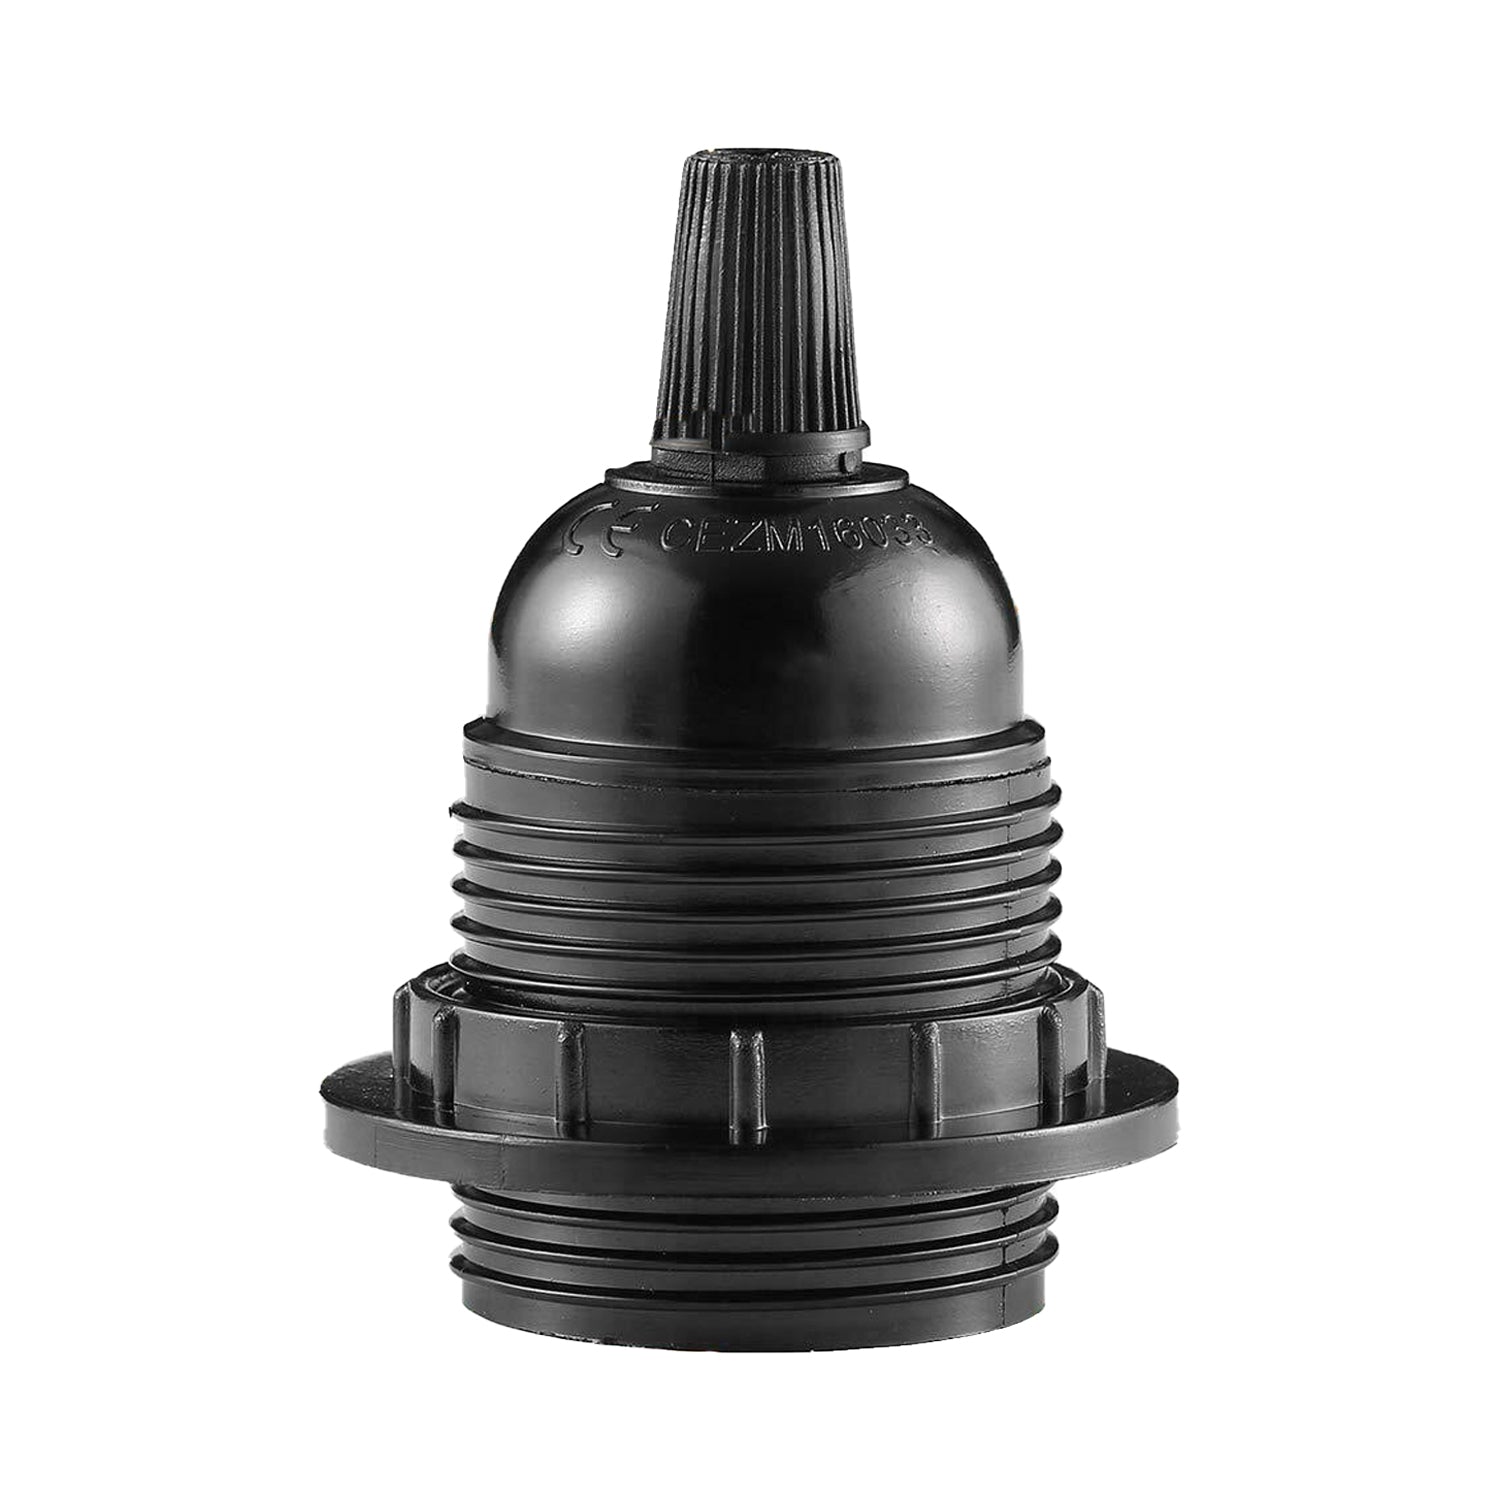 Black Bakelight with thread and without ring Lamp holder~3652 - LEDSone UK Ltd